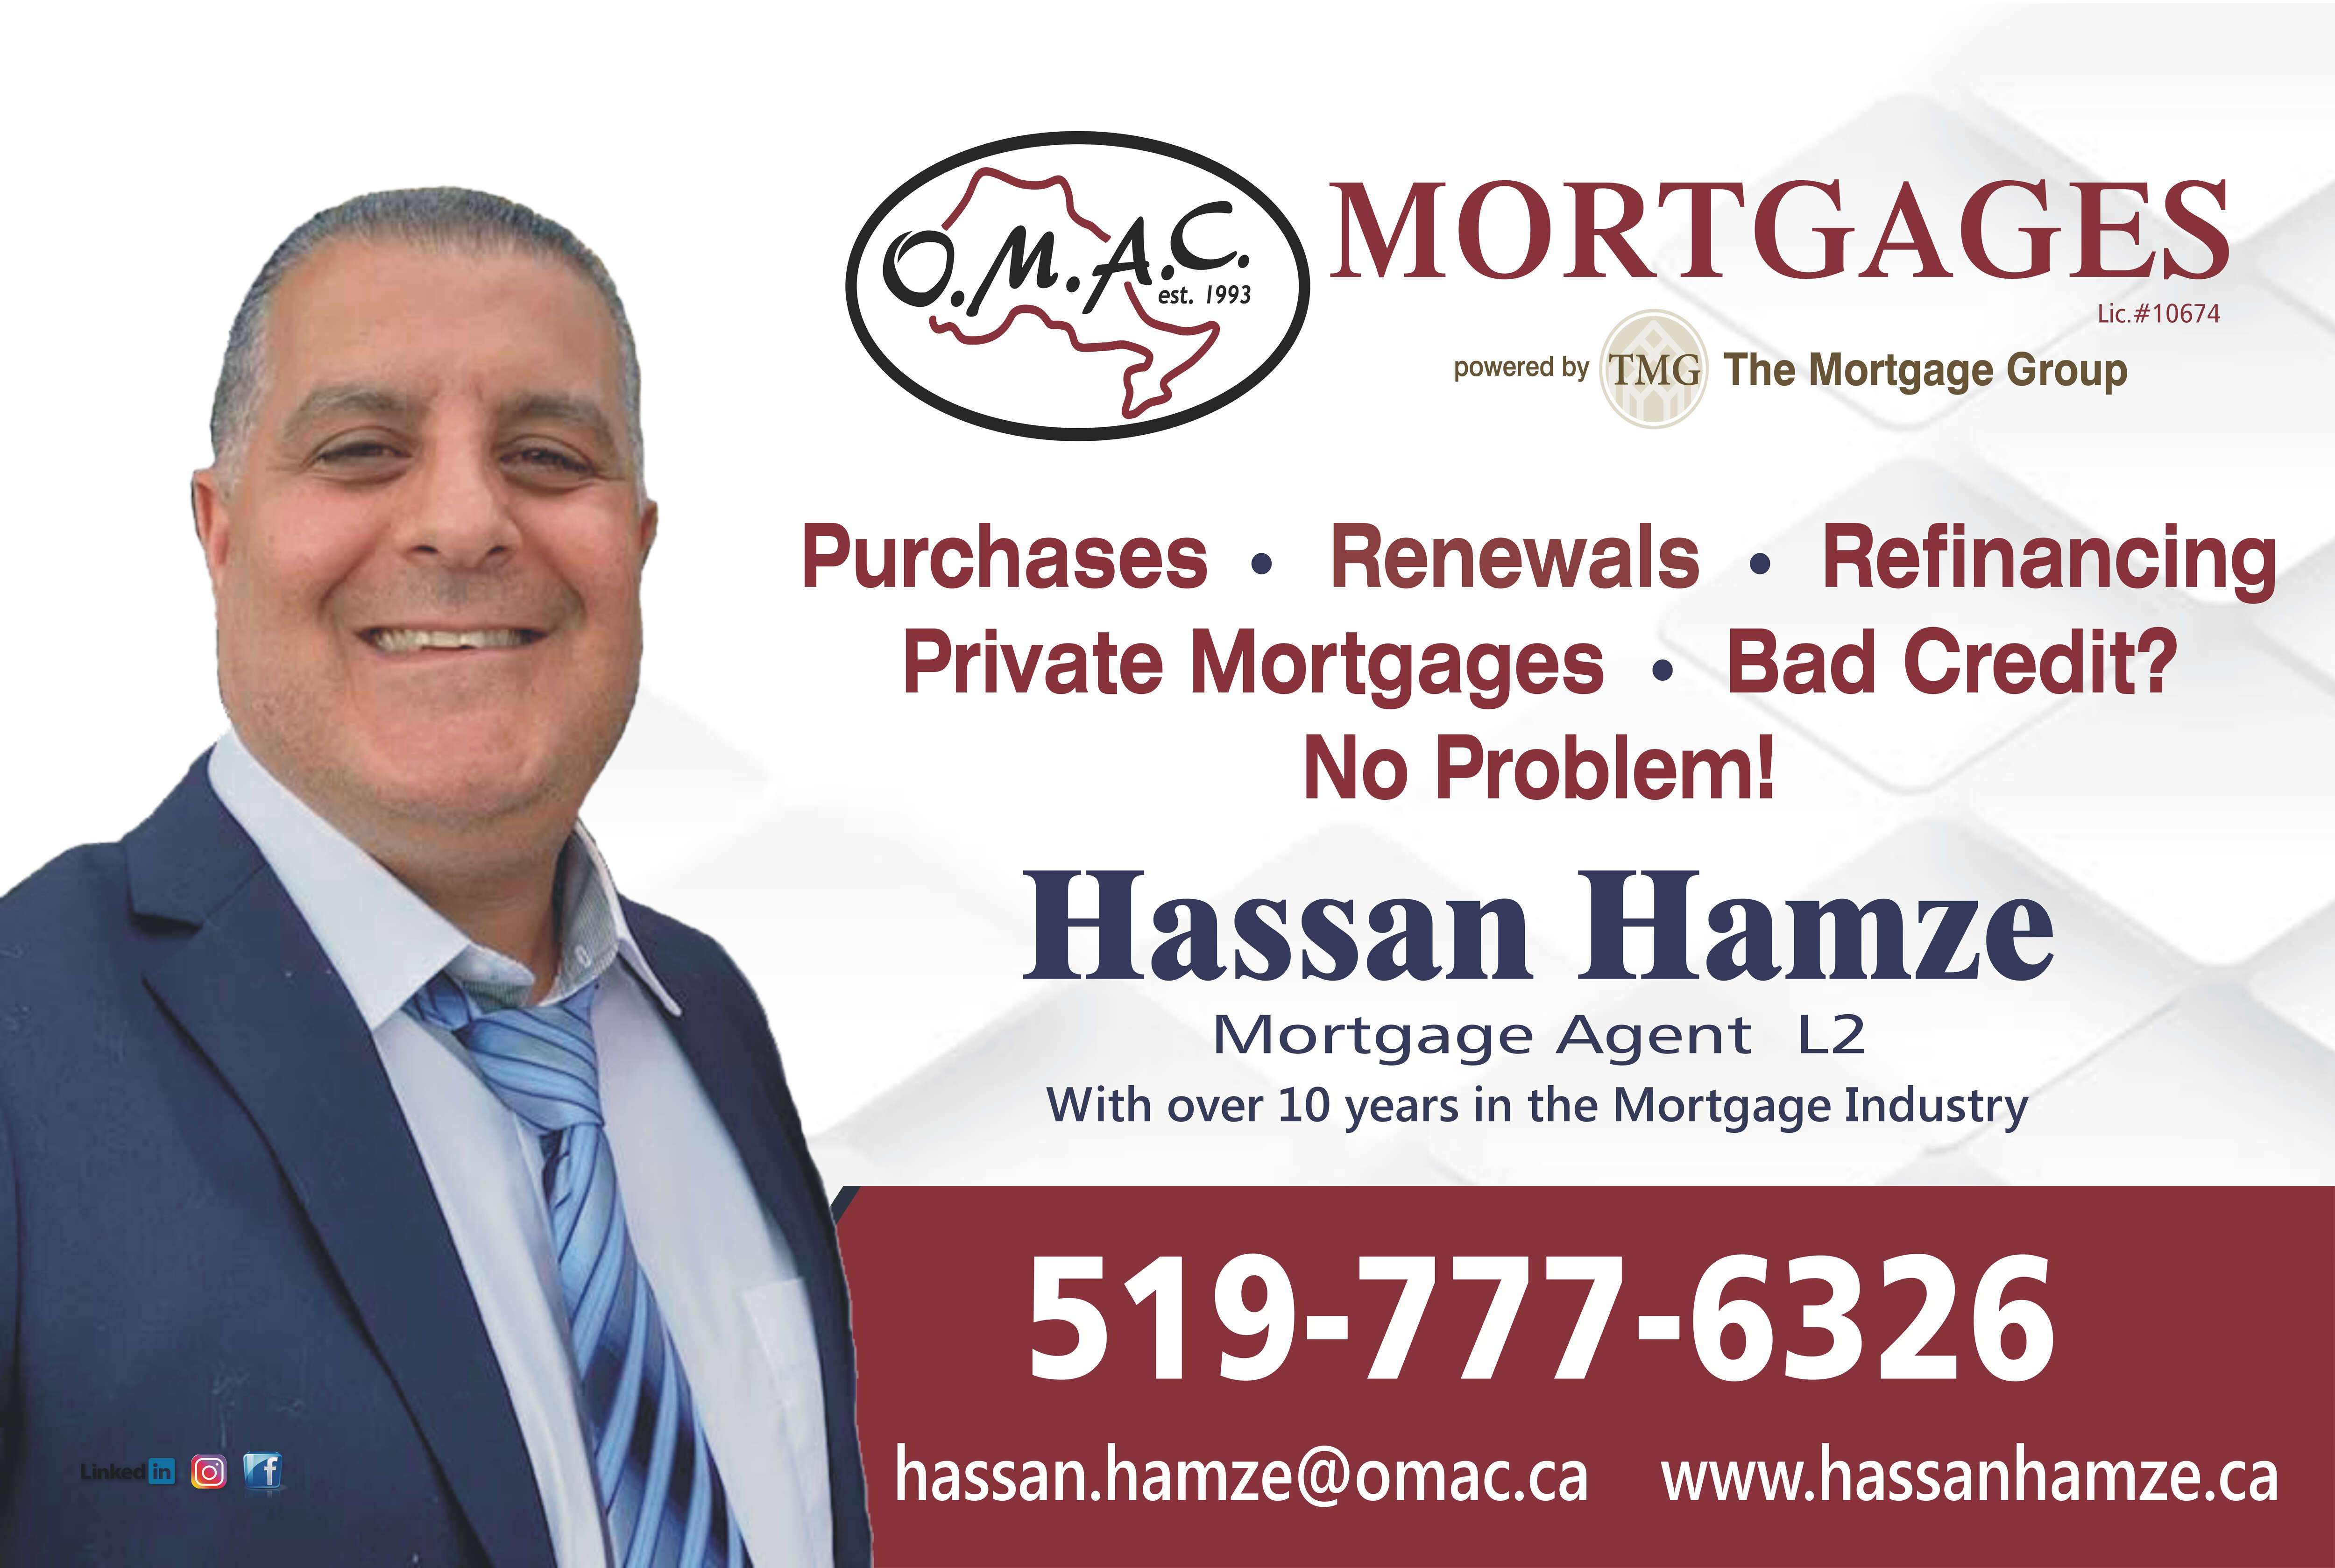 Omac Mortgages- Hassan Hamze